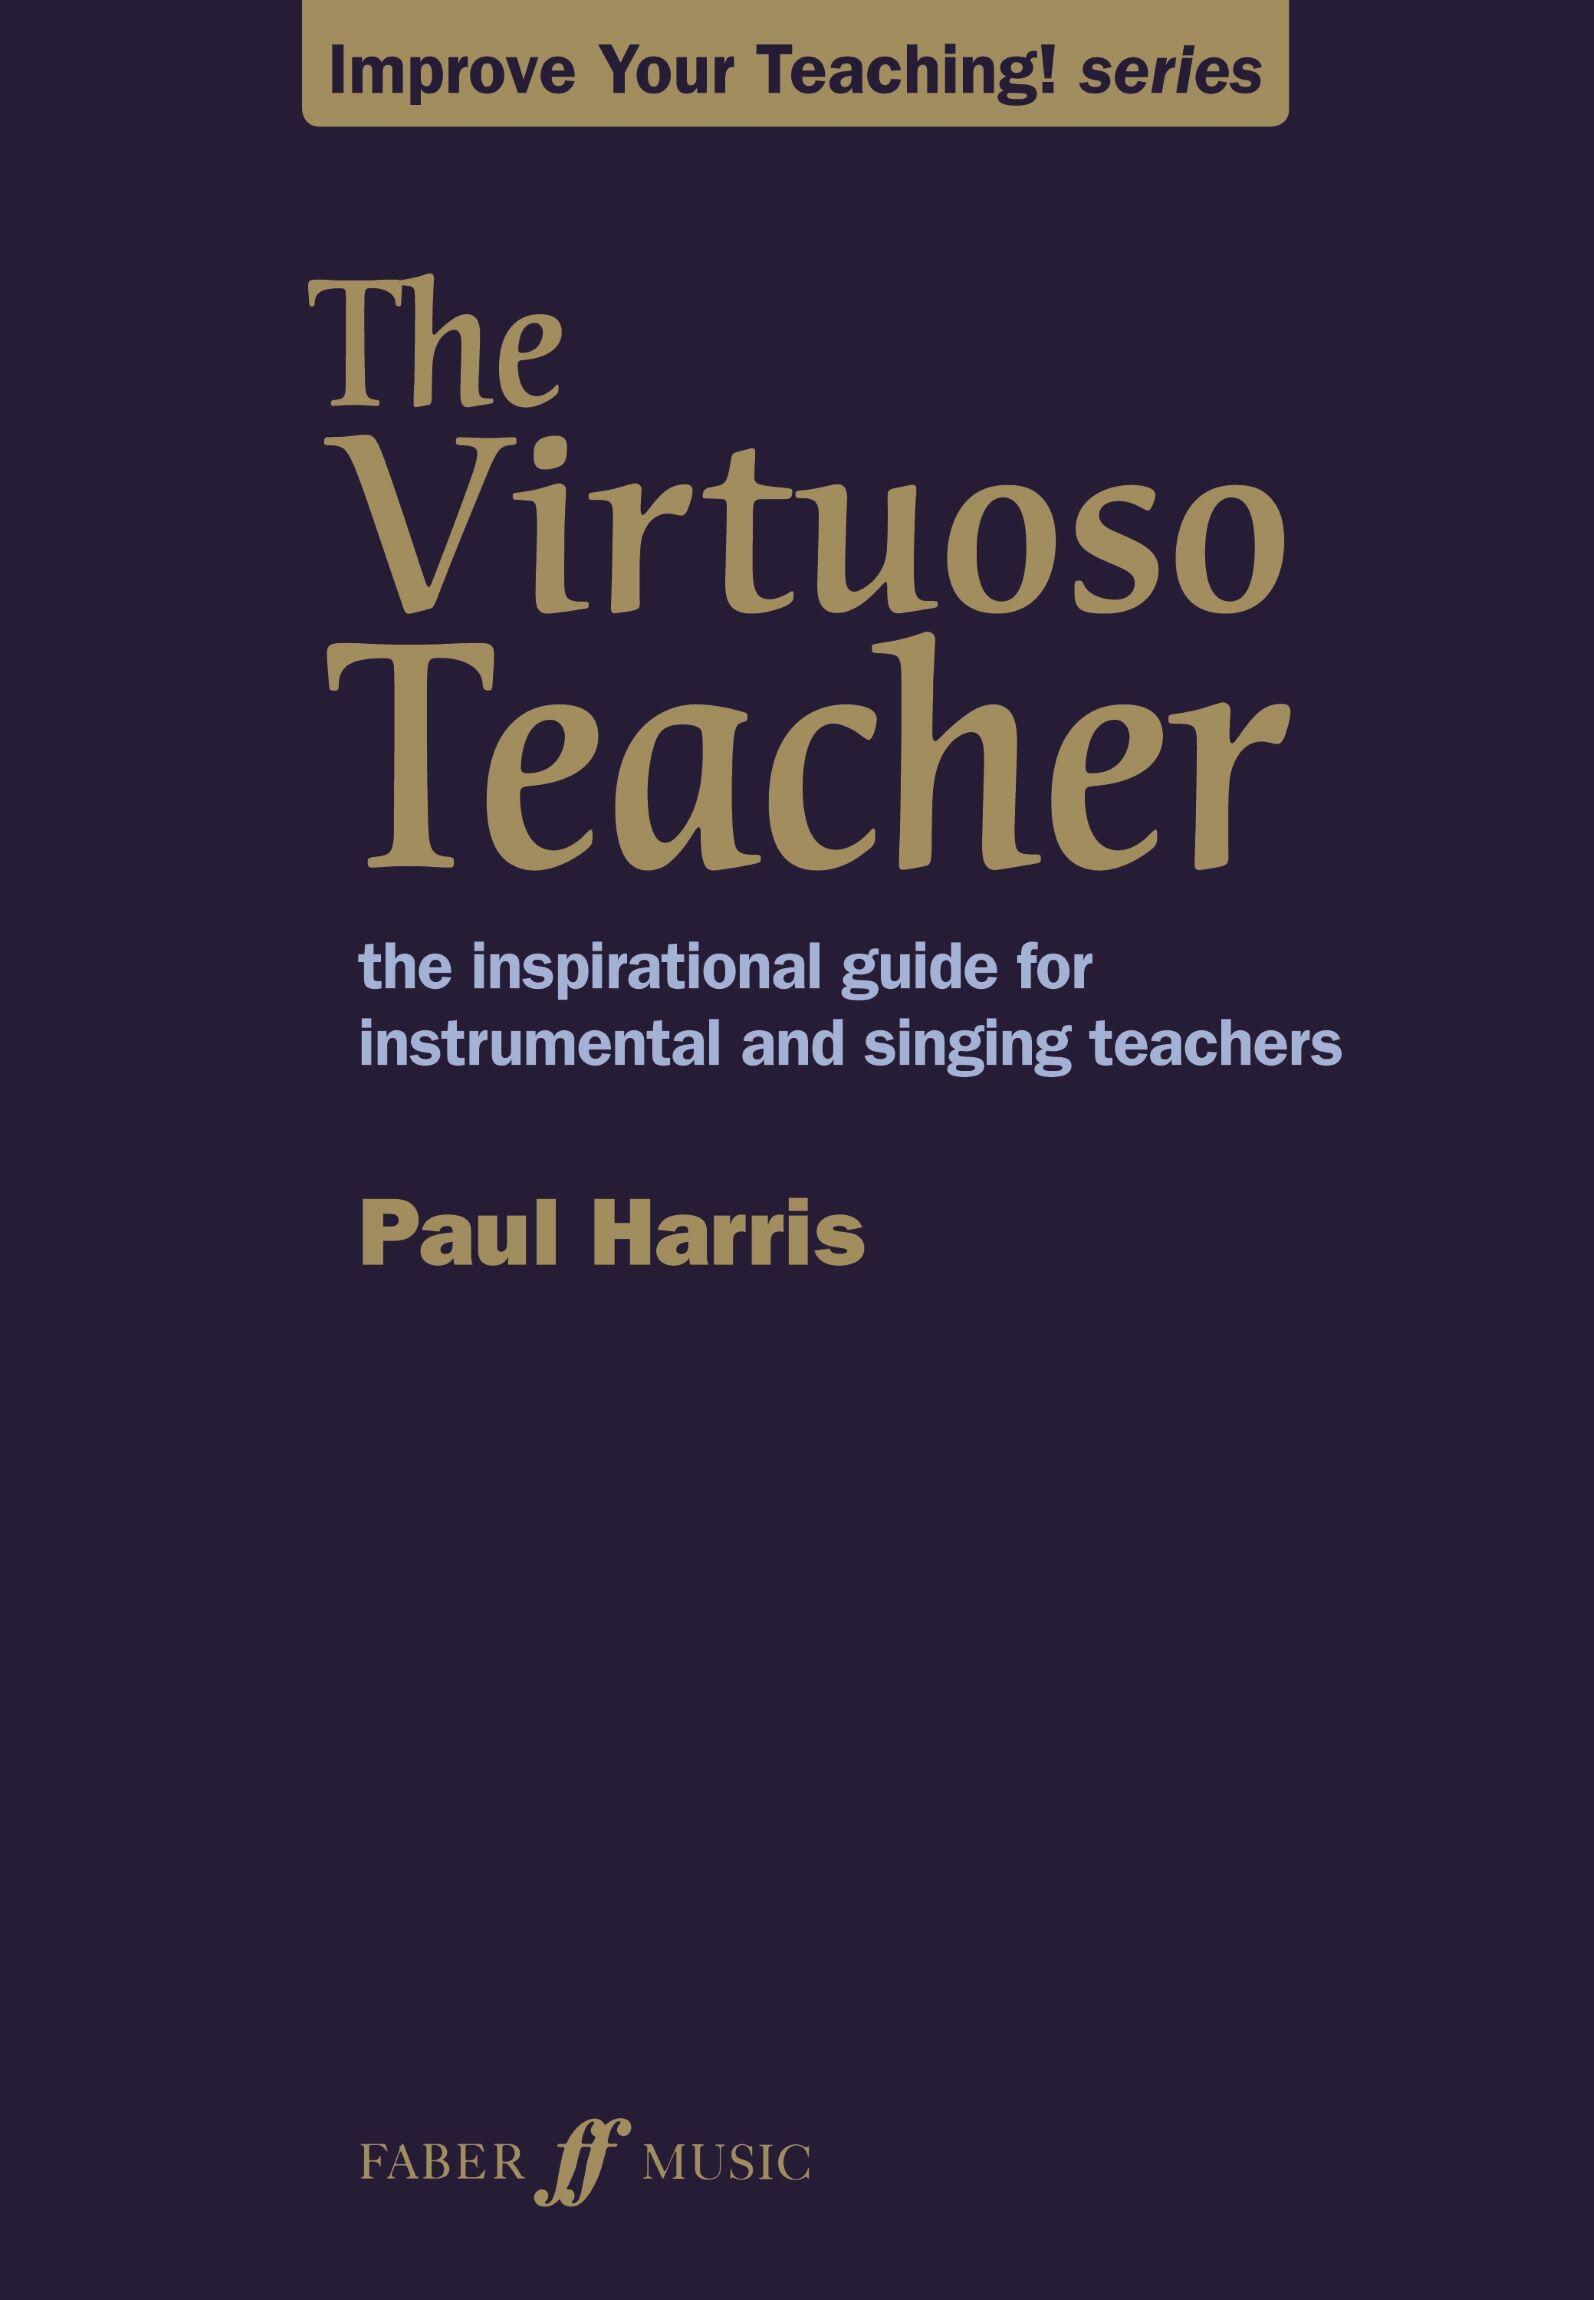 The Virtuoso Teacher : photo 1